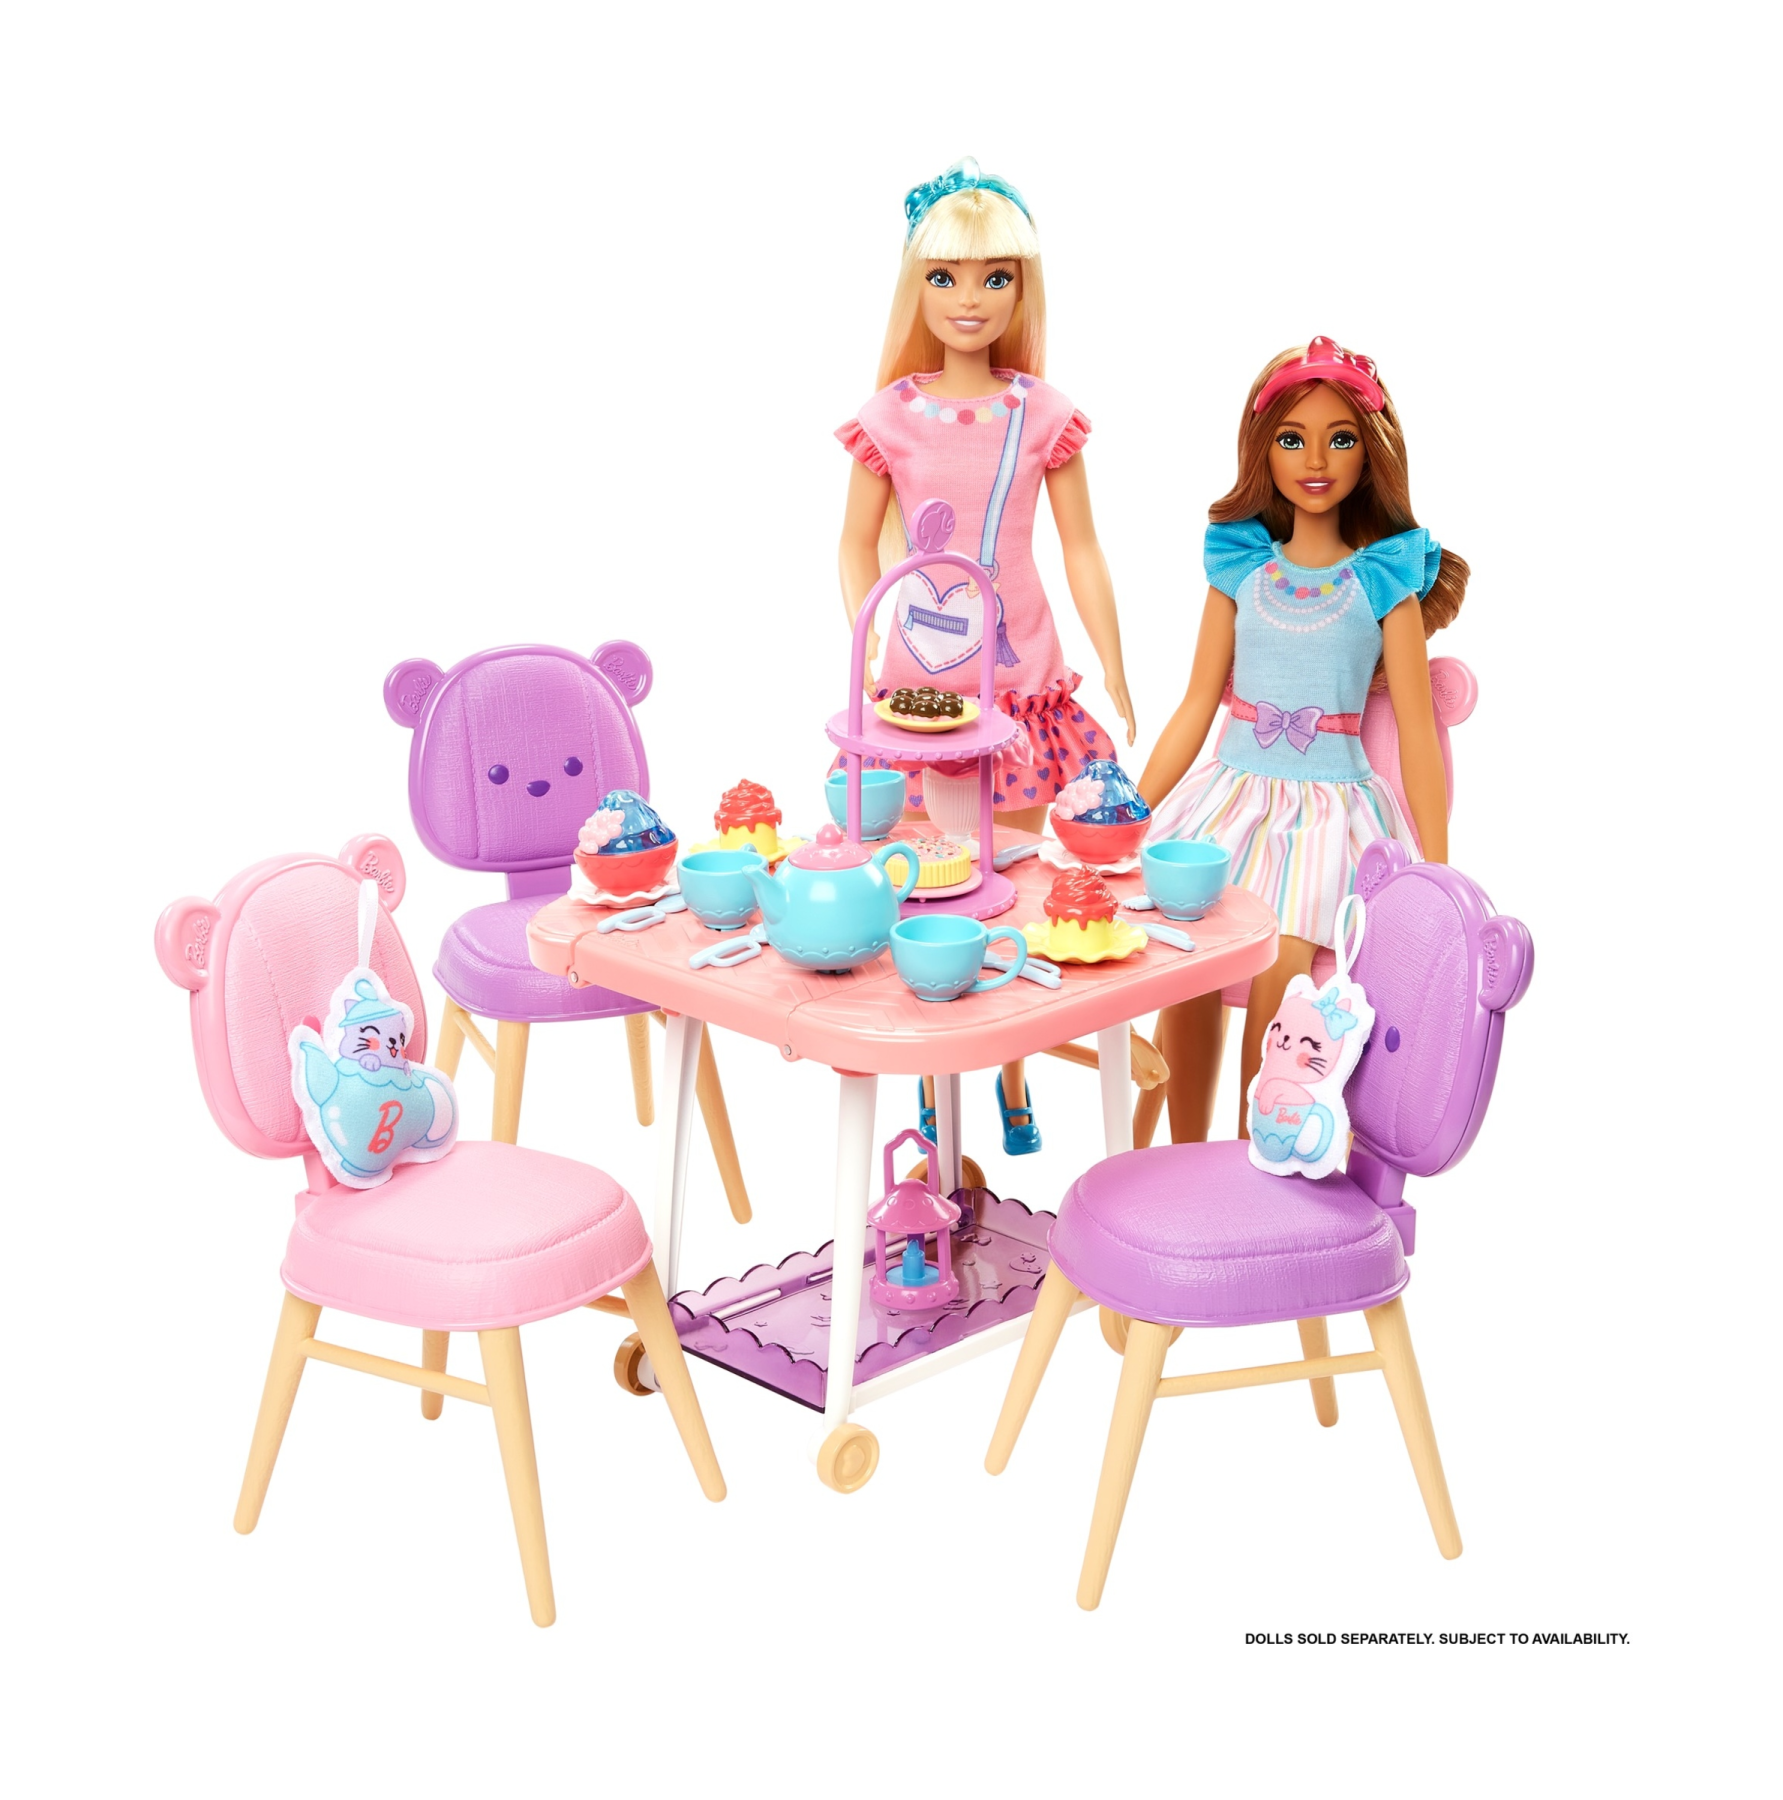 Barbie - la mia prima barbie, set servizio da tè, playset con 18+ accessori e due gattini di peluche inclusi, 3+ anni, hmm65 - Barbie